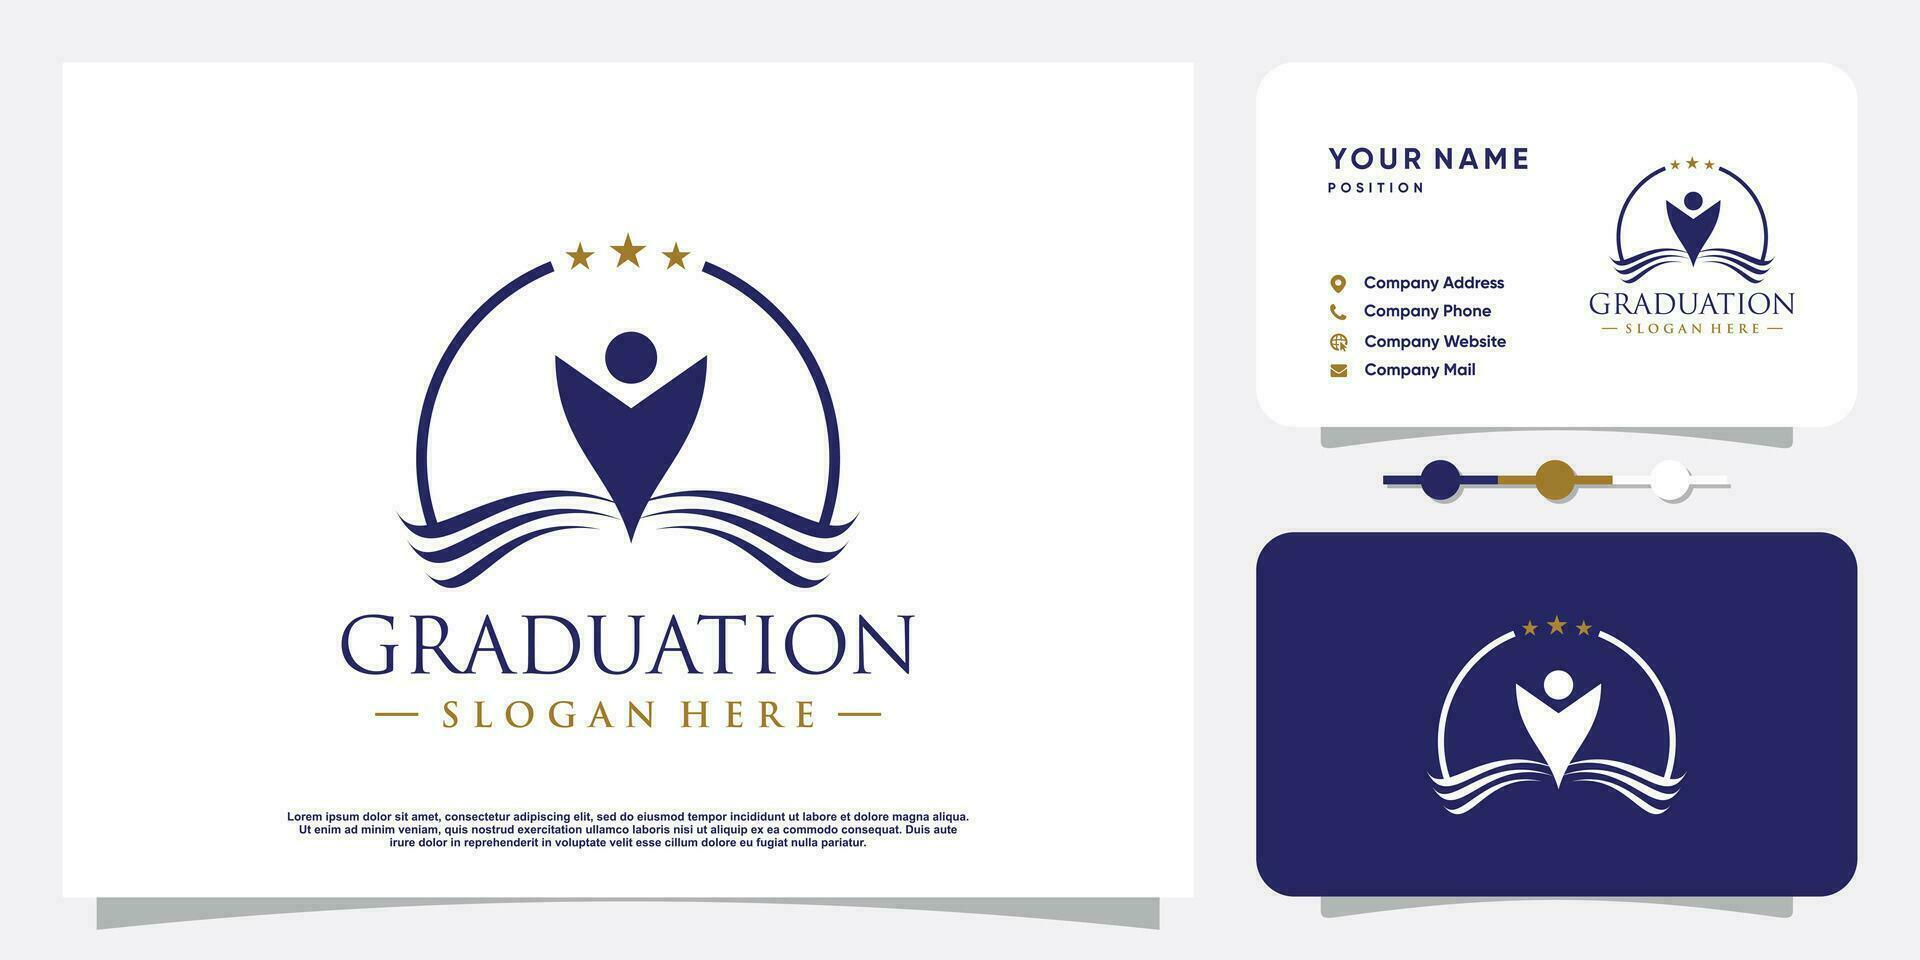 Graduation logo design element vector with creative idea